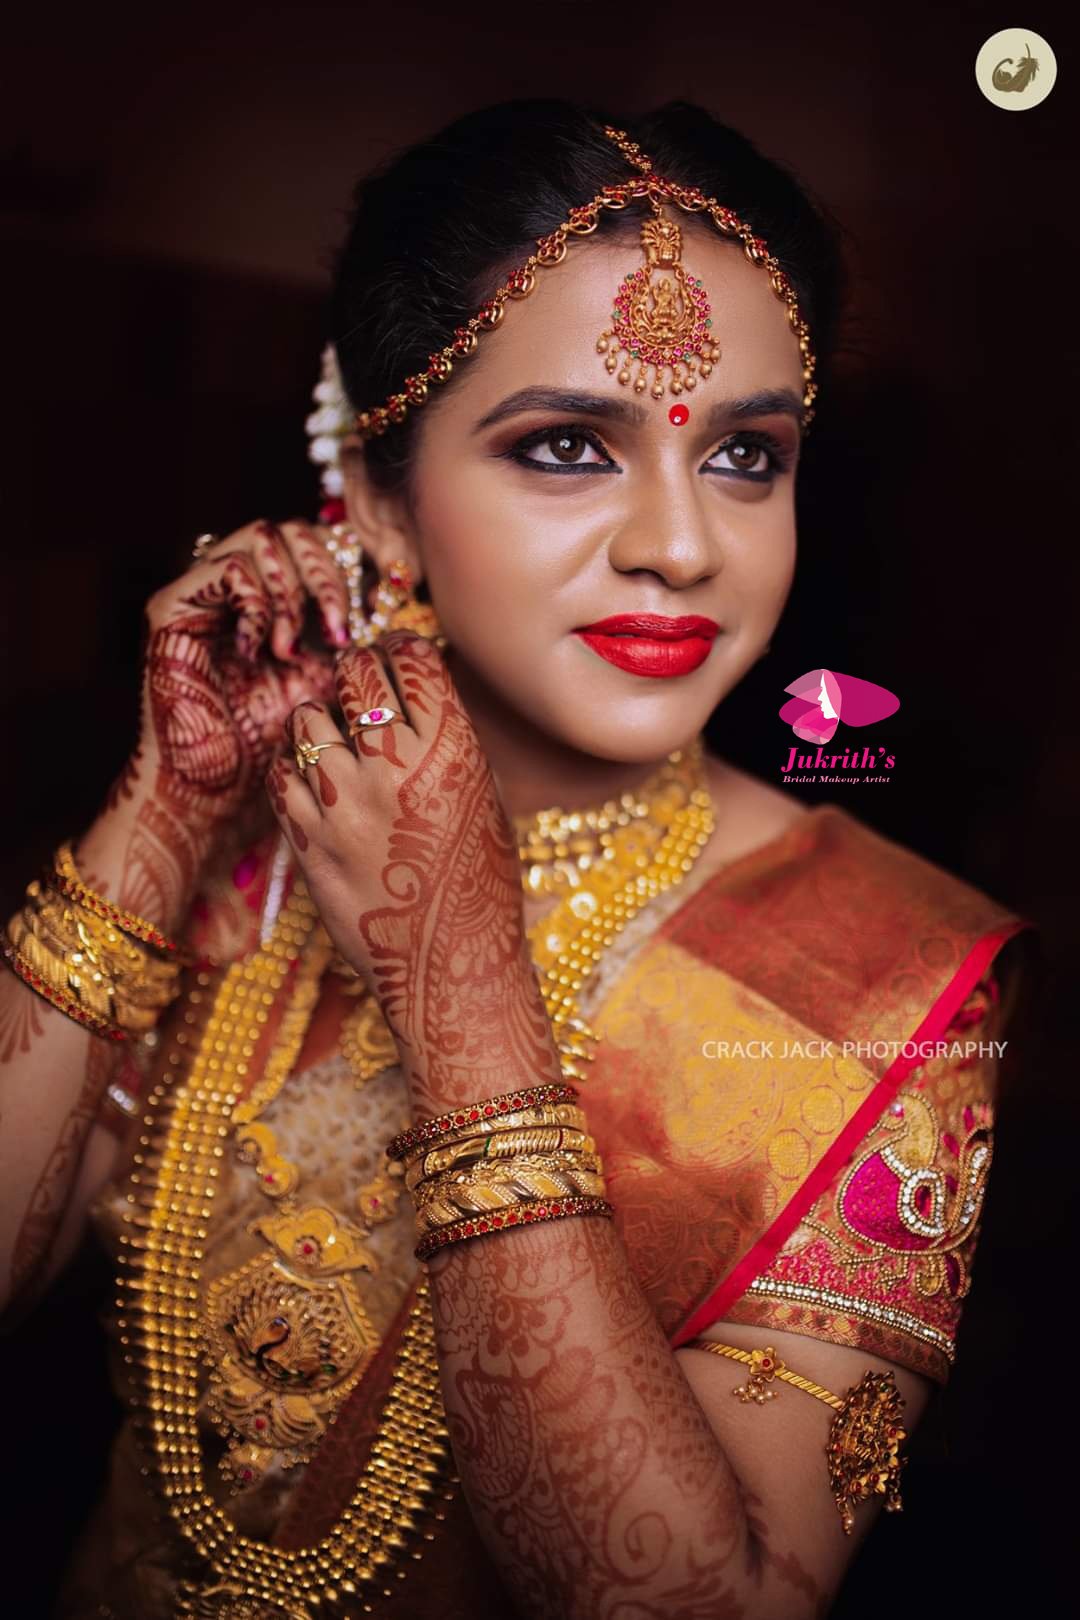 Wedding hairstyles - Tamilnadu wedding sarees | Facebook